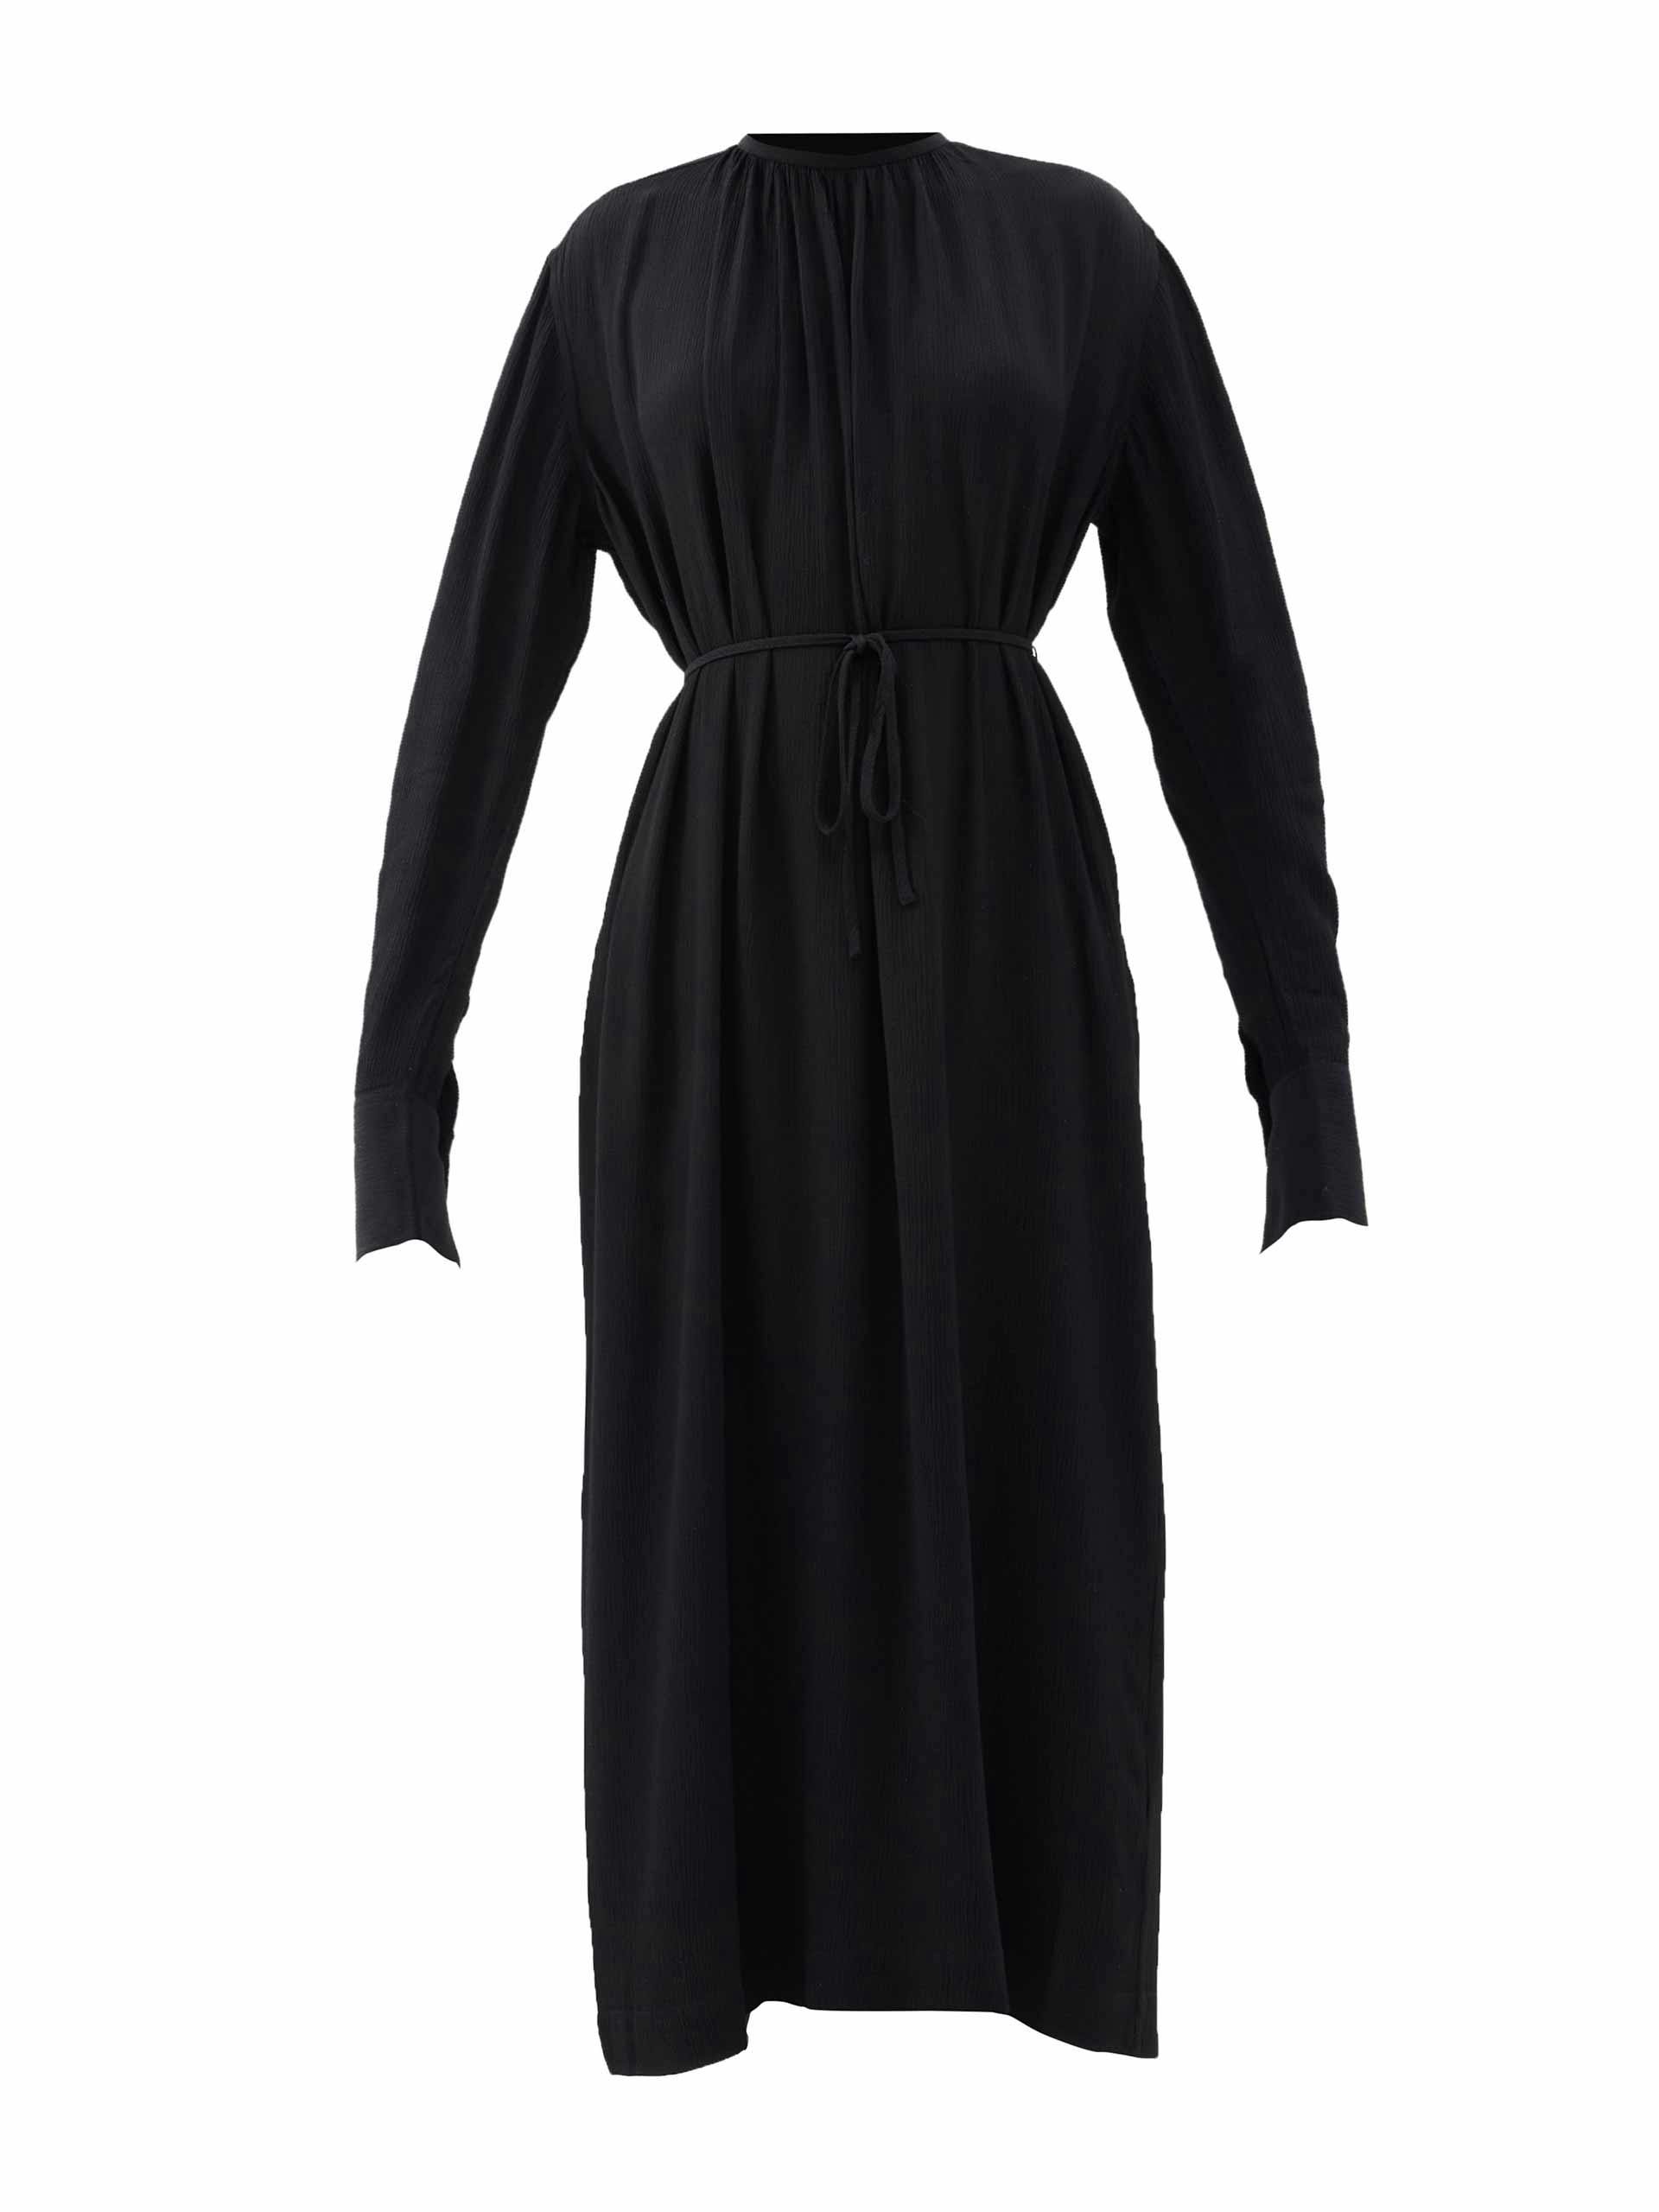 Black crepe dress